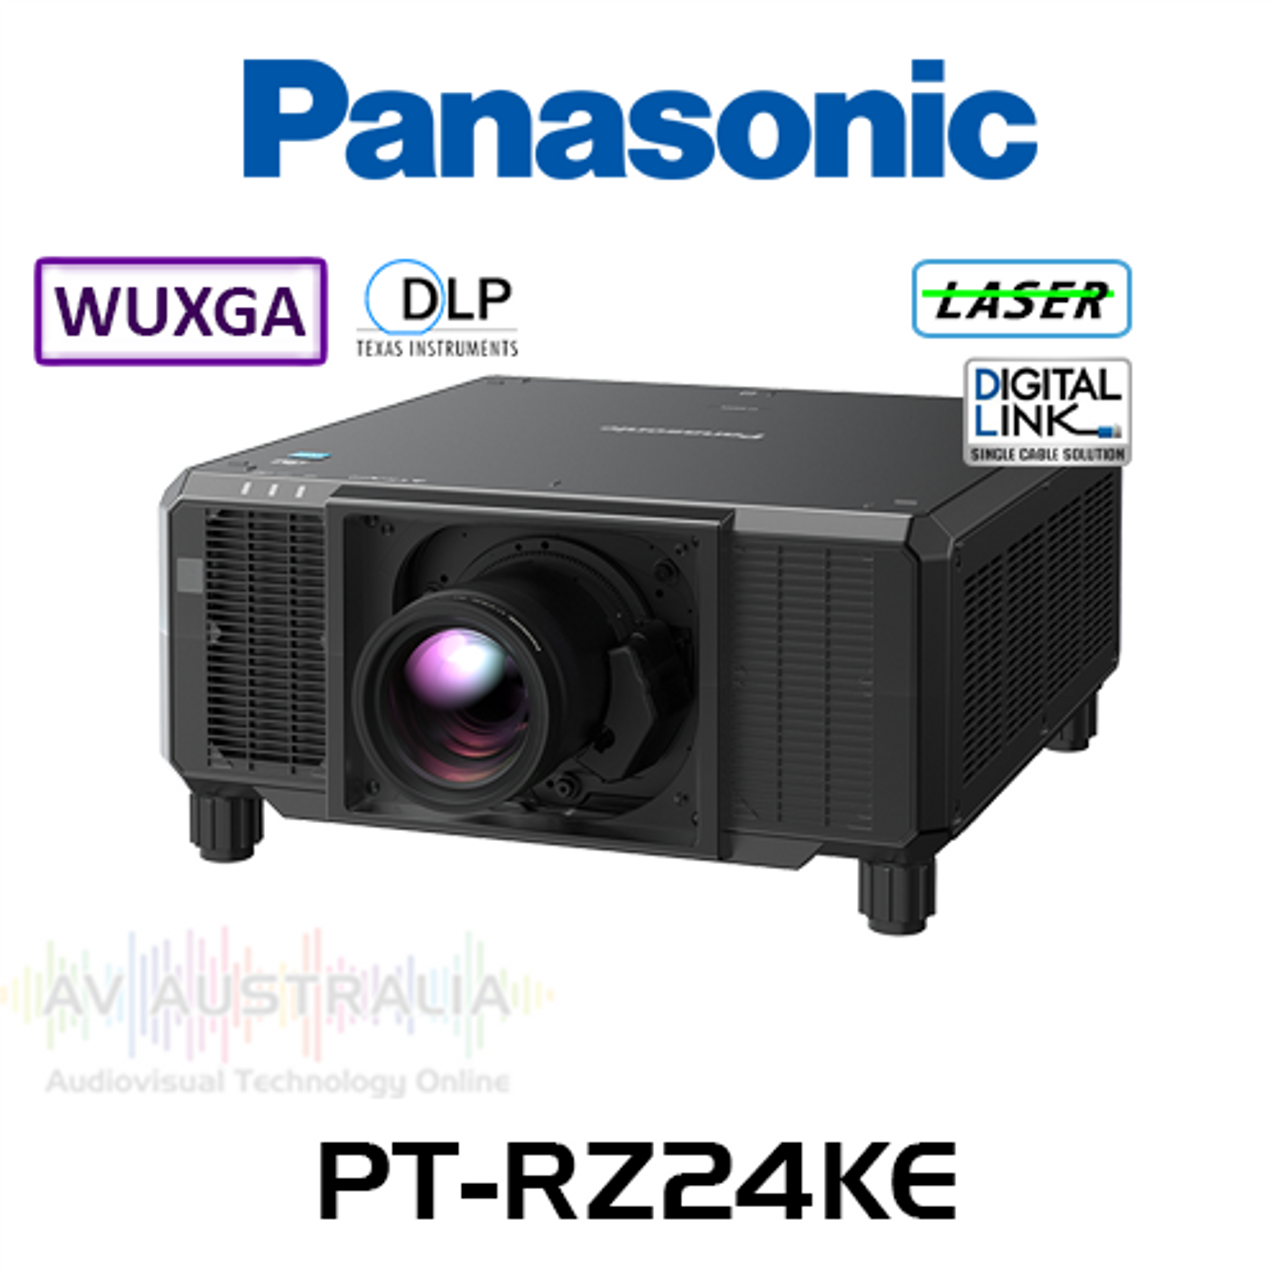 Panasonic PT-RZ24KE WUXGA 20,000 Lumen Digital Link 3-Chip DLP Laser Projector